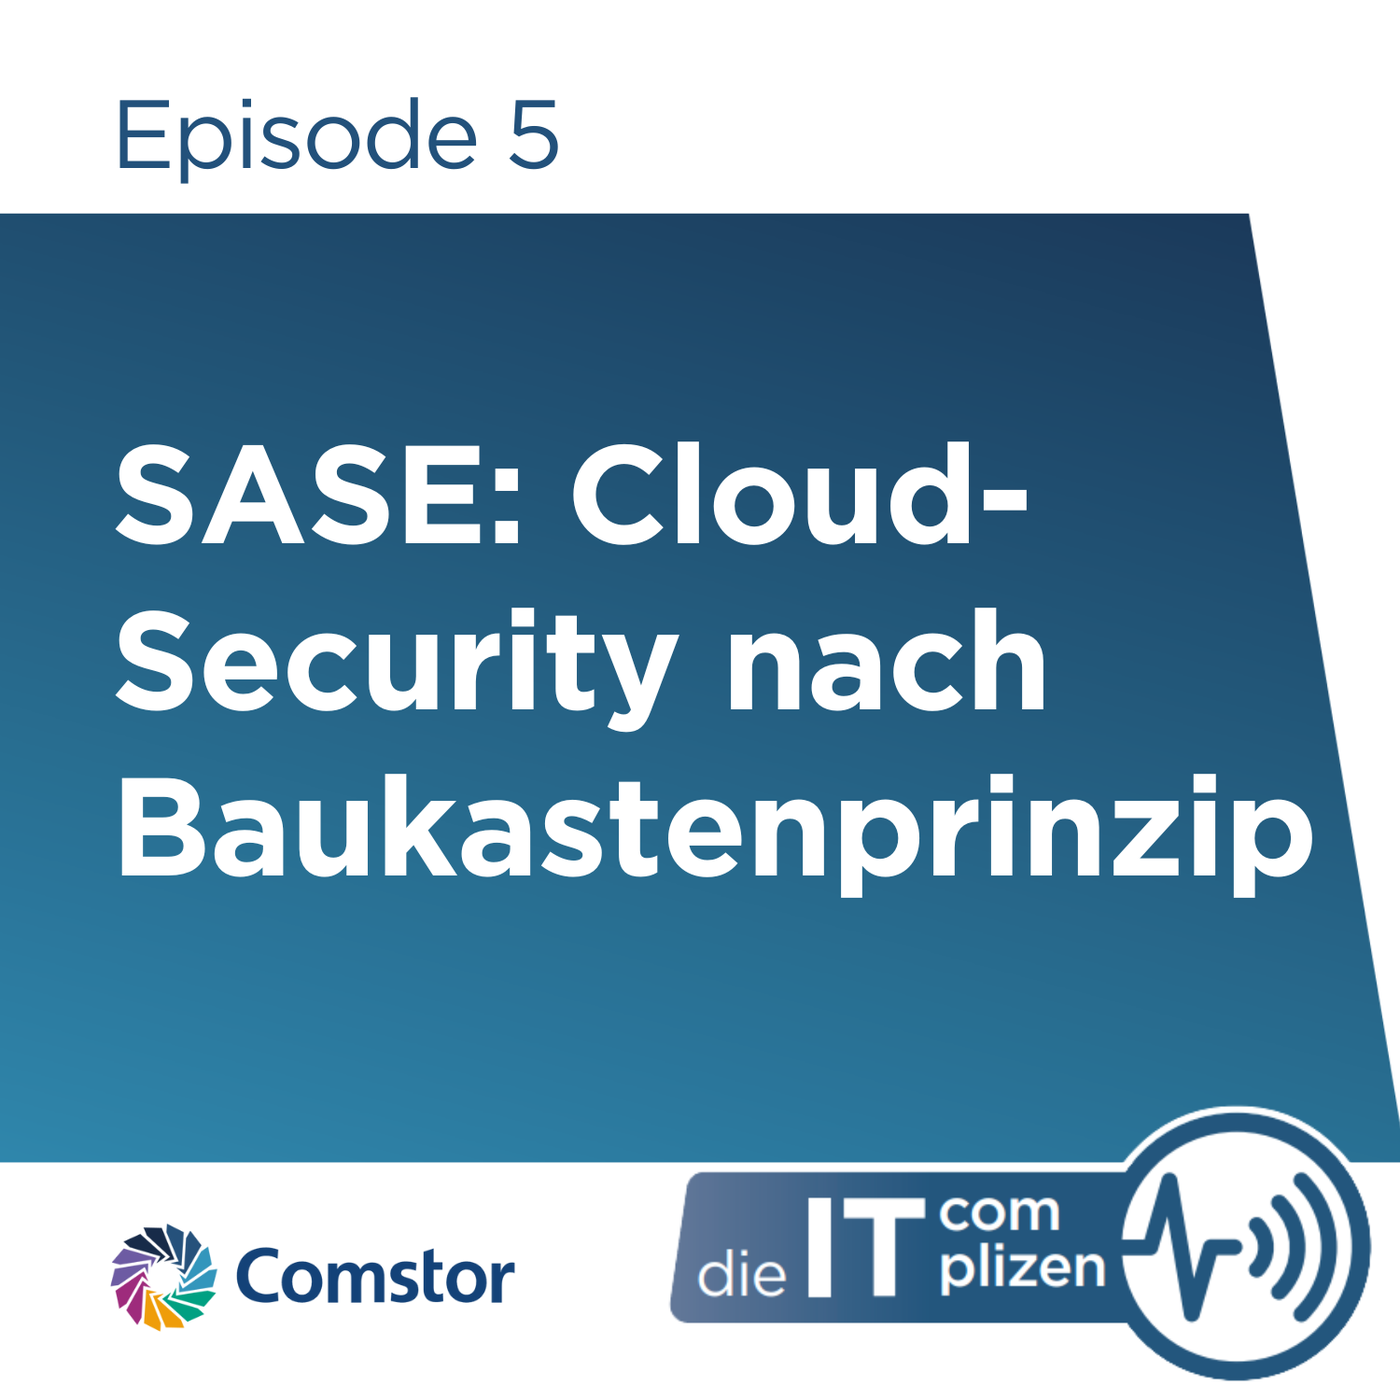 SASE: Cloud-Security nach Baukastenprinzip